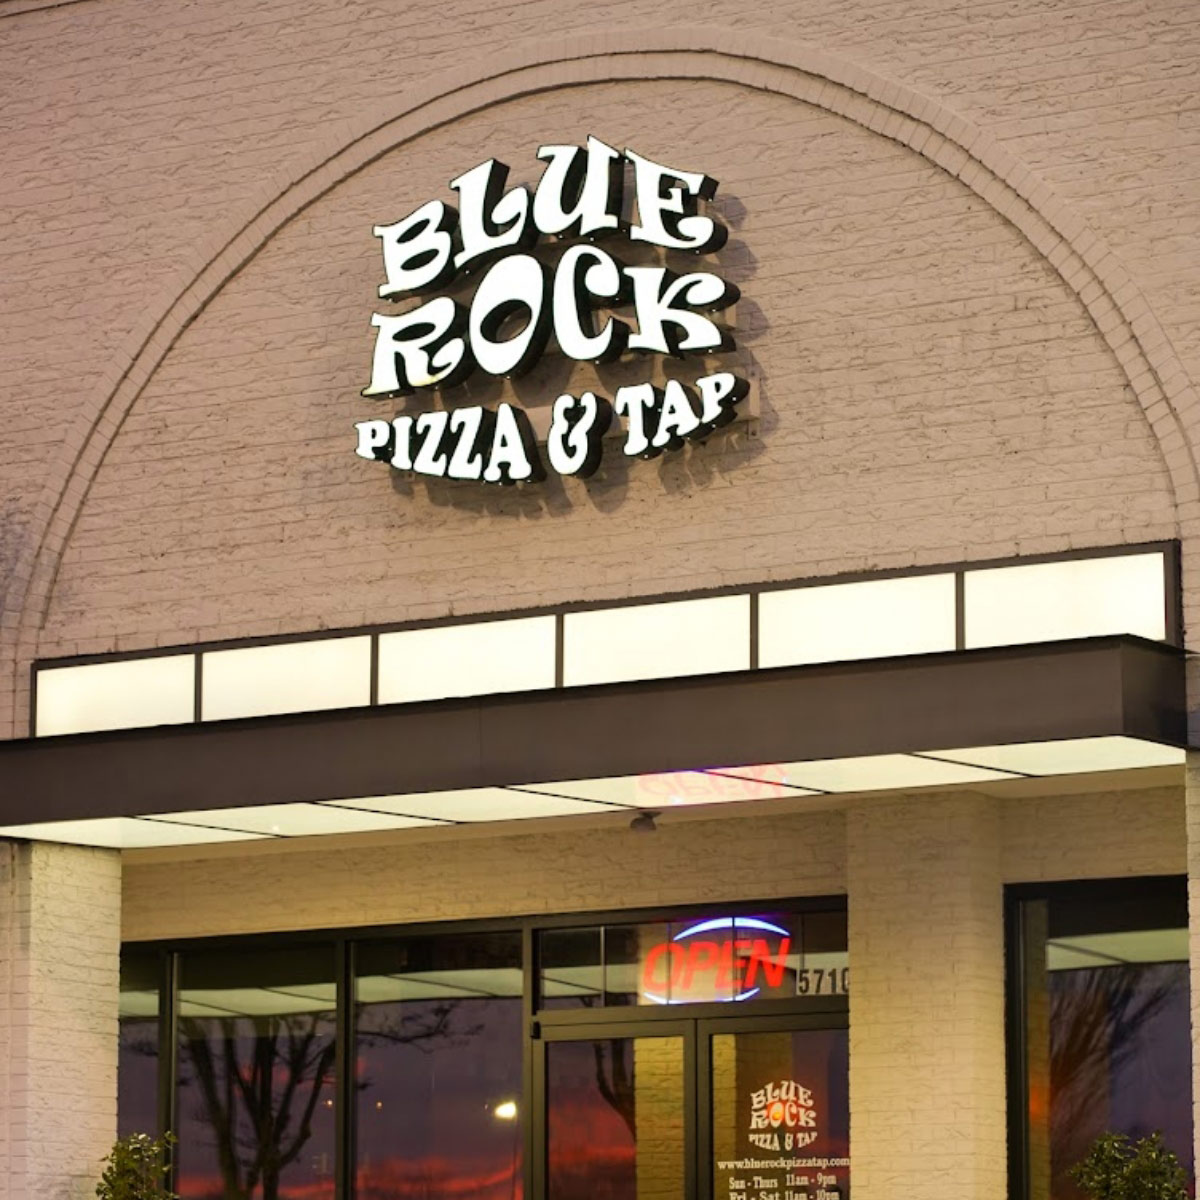 Blue Rock Pizza & Tap interionr